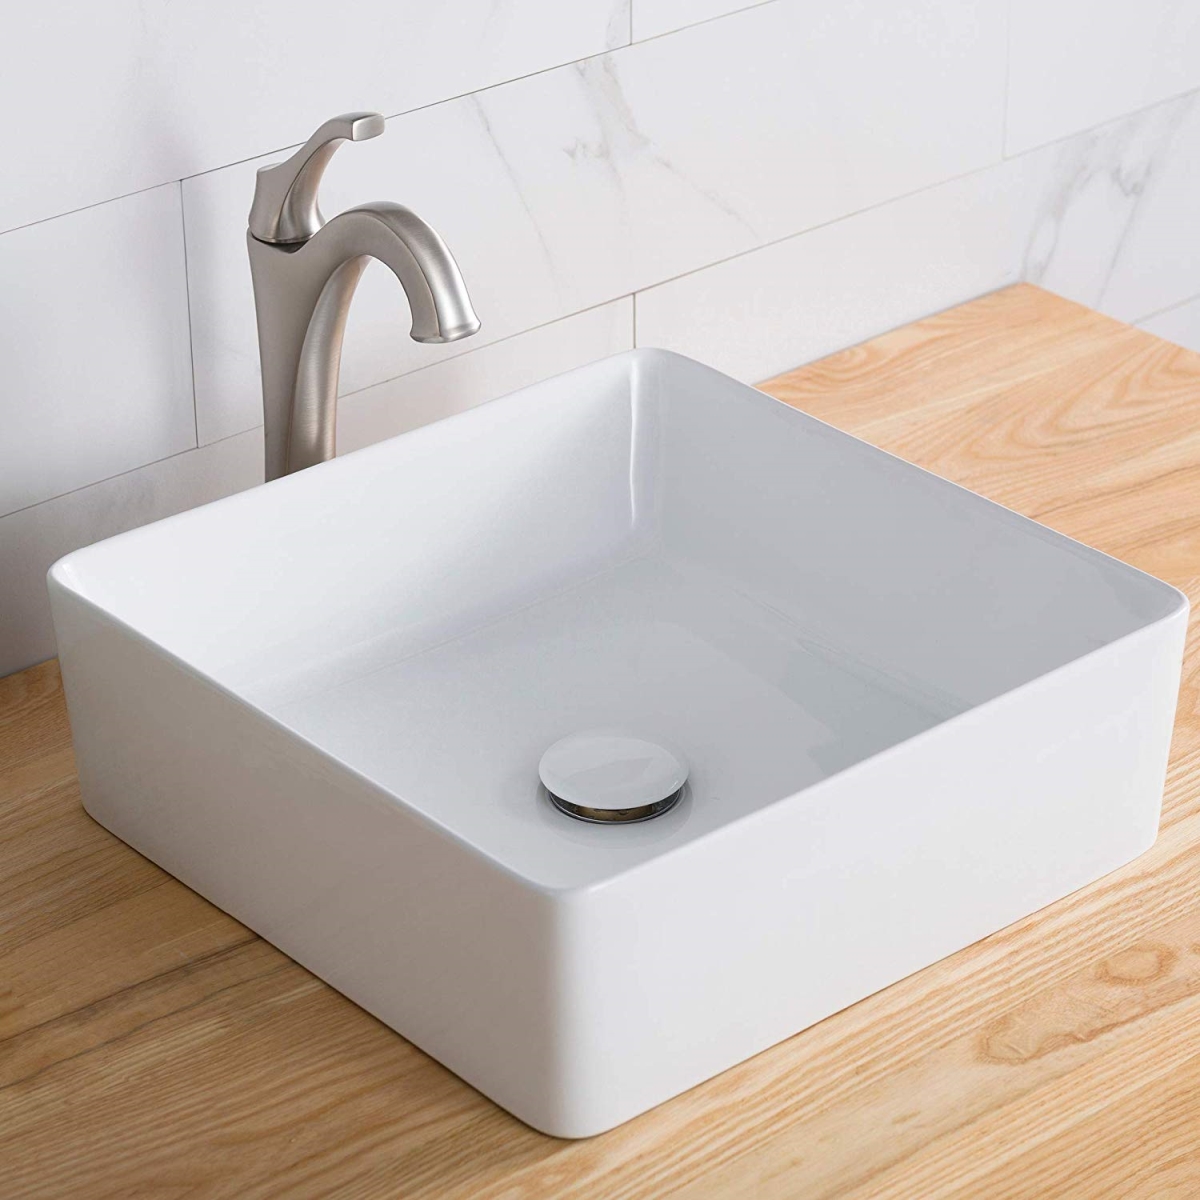 Kraus Kcv-202gwh 15.62 X 15.62 X 5.125 In. Square Porcelain Ceramic Vessel Bathroom Sink, White